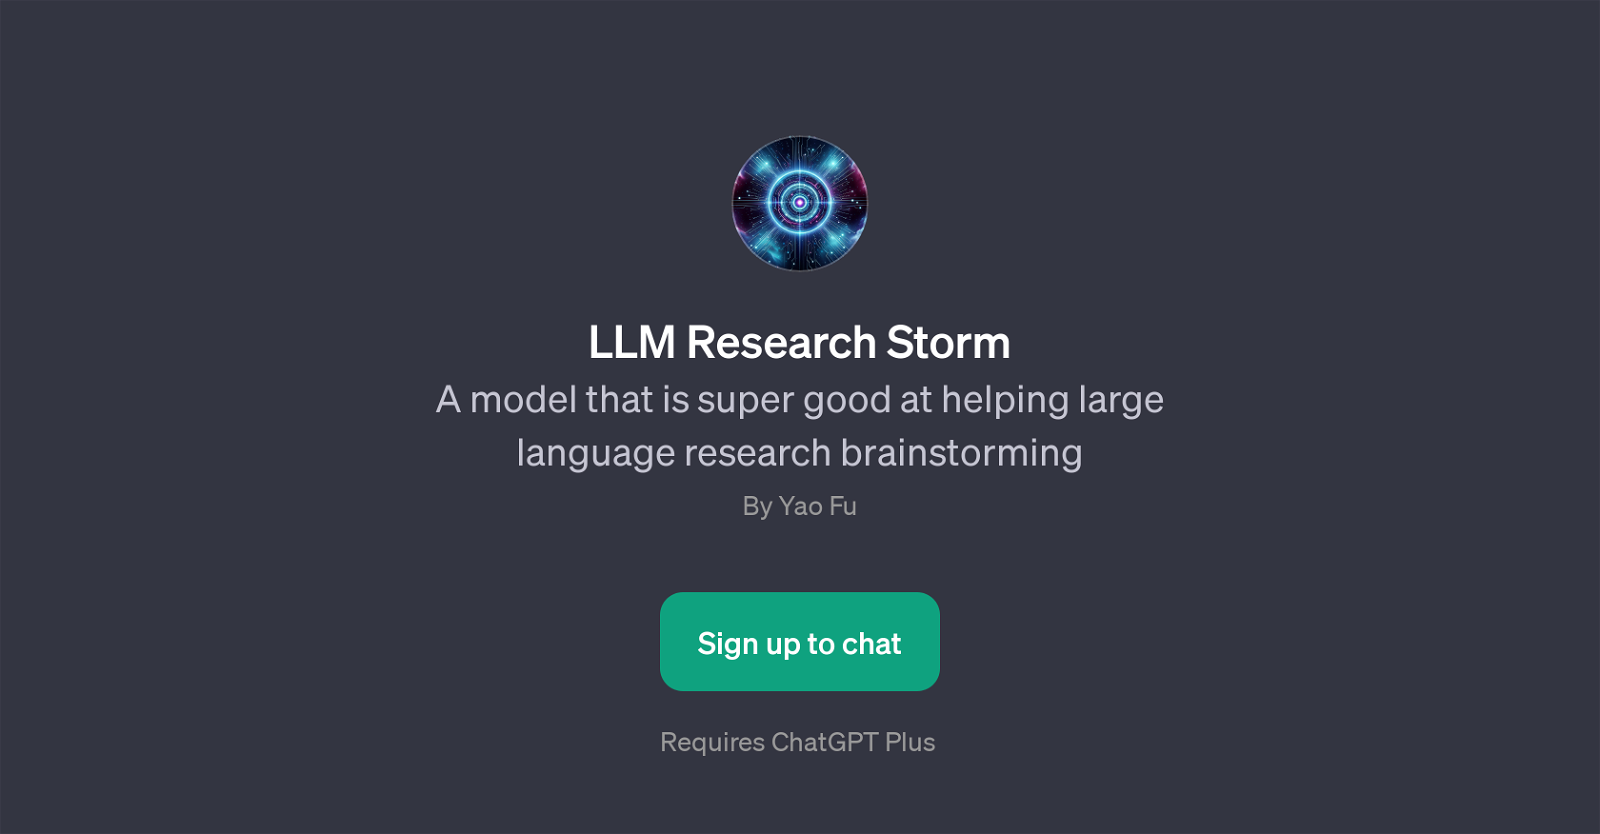 LLM Research Storm website